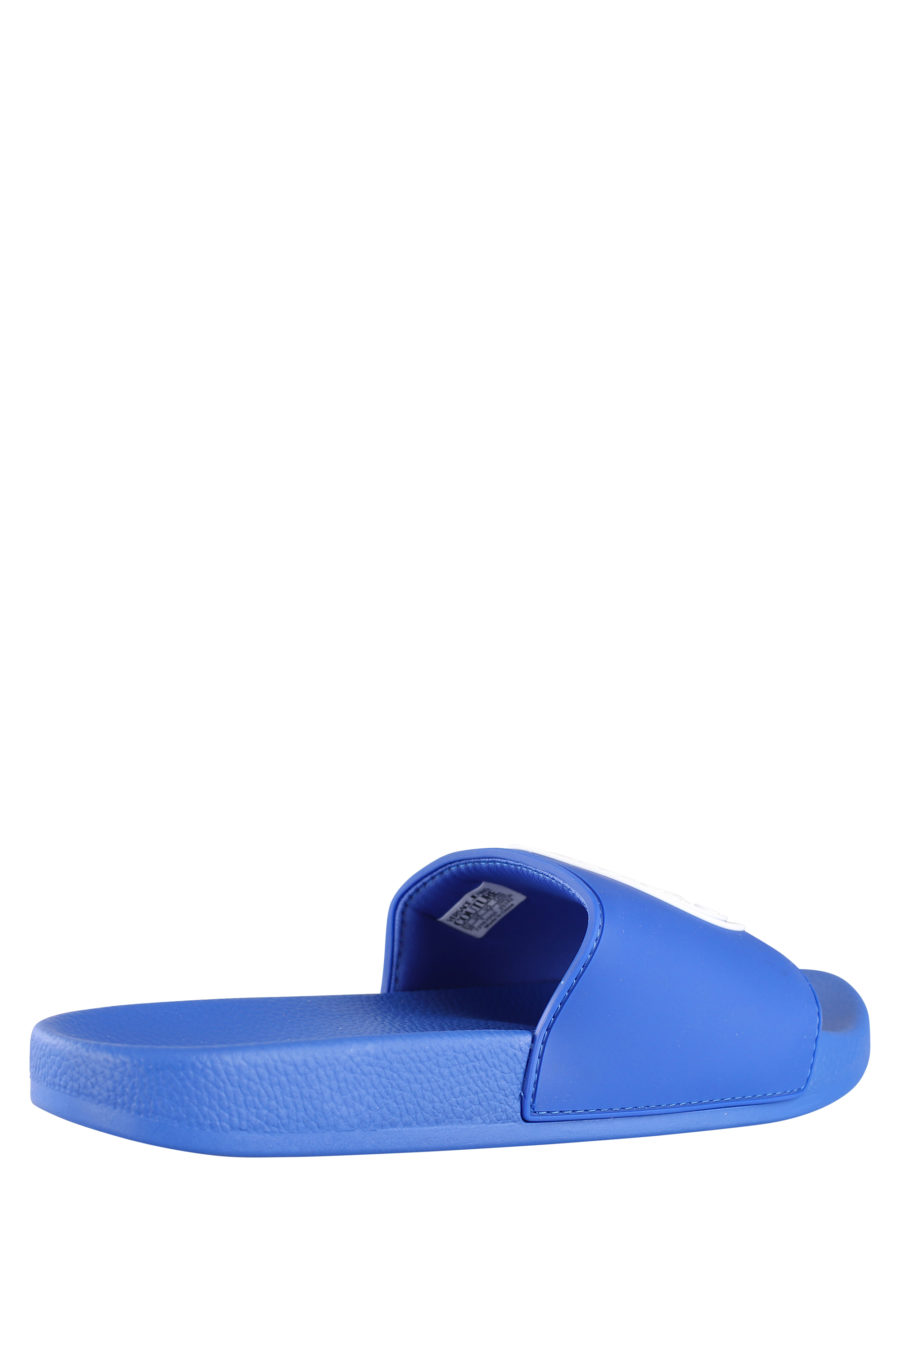 Blue flip flops with circle logo - IMG 9666